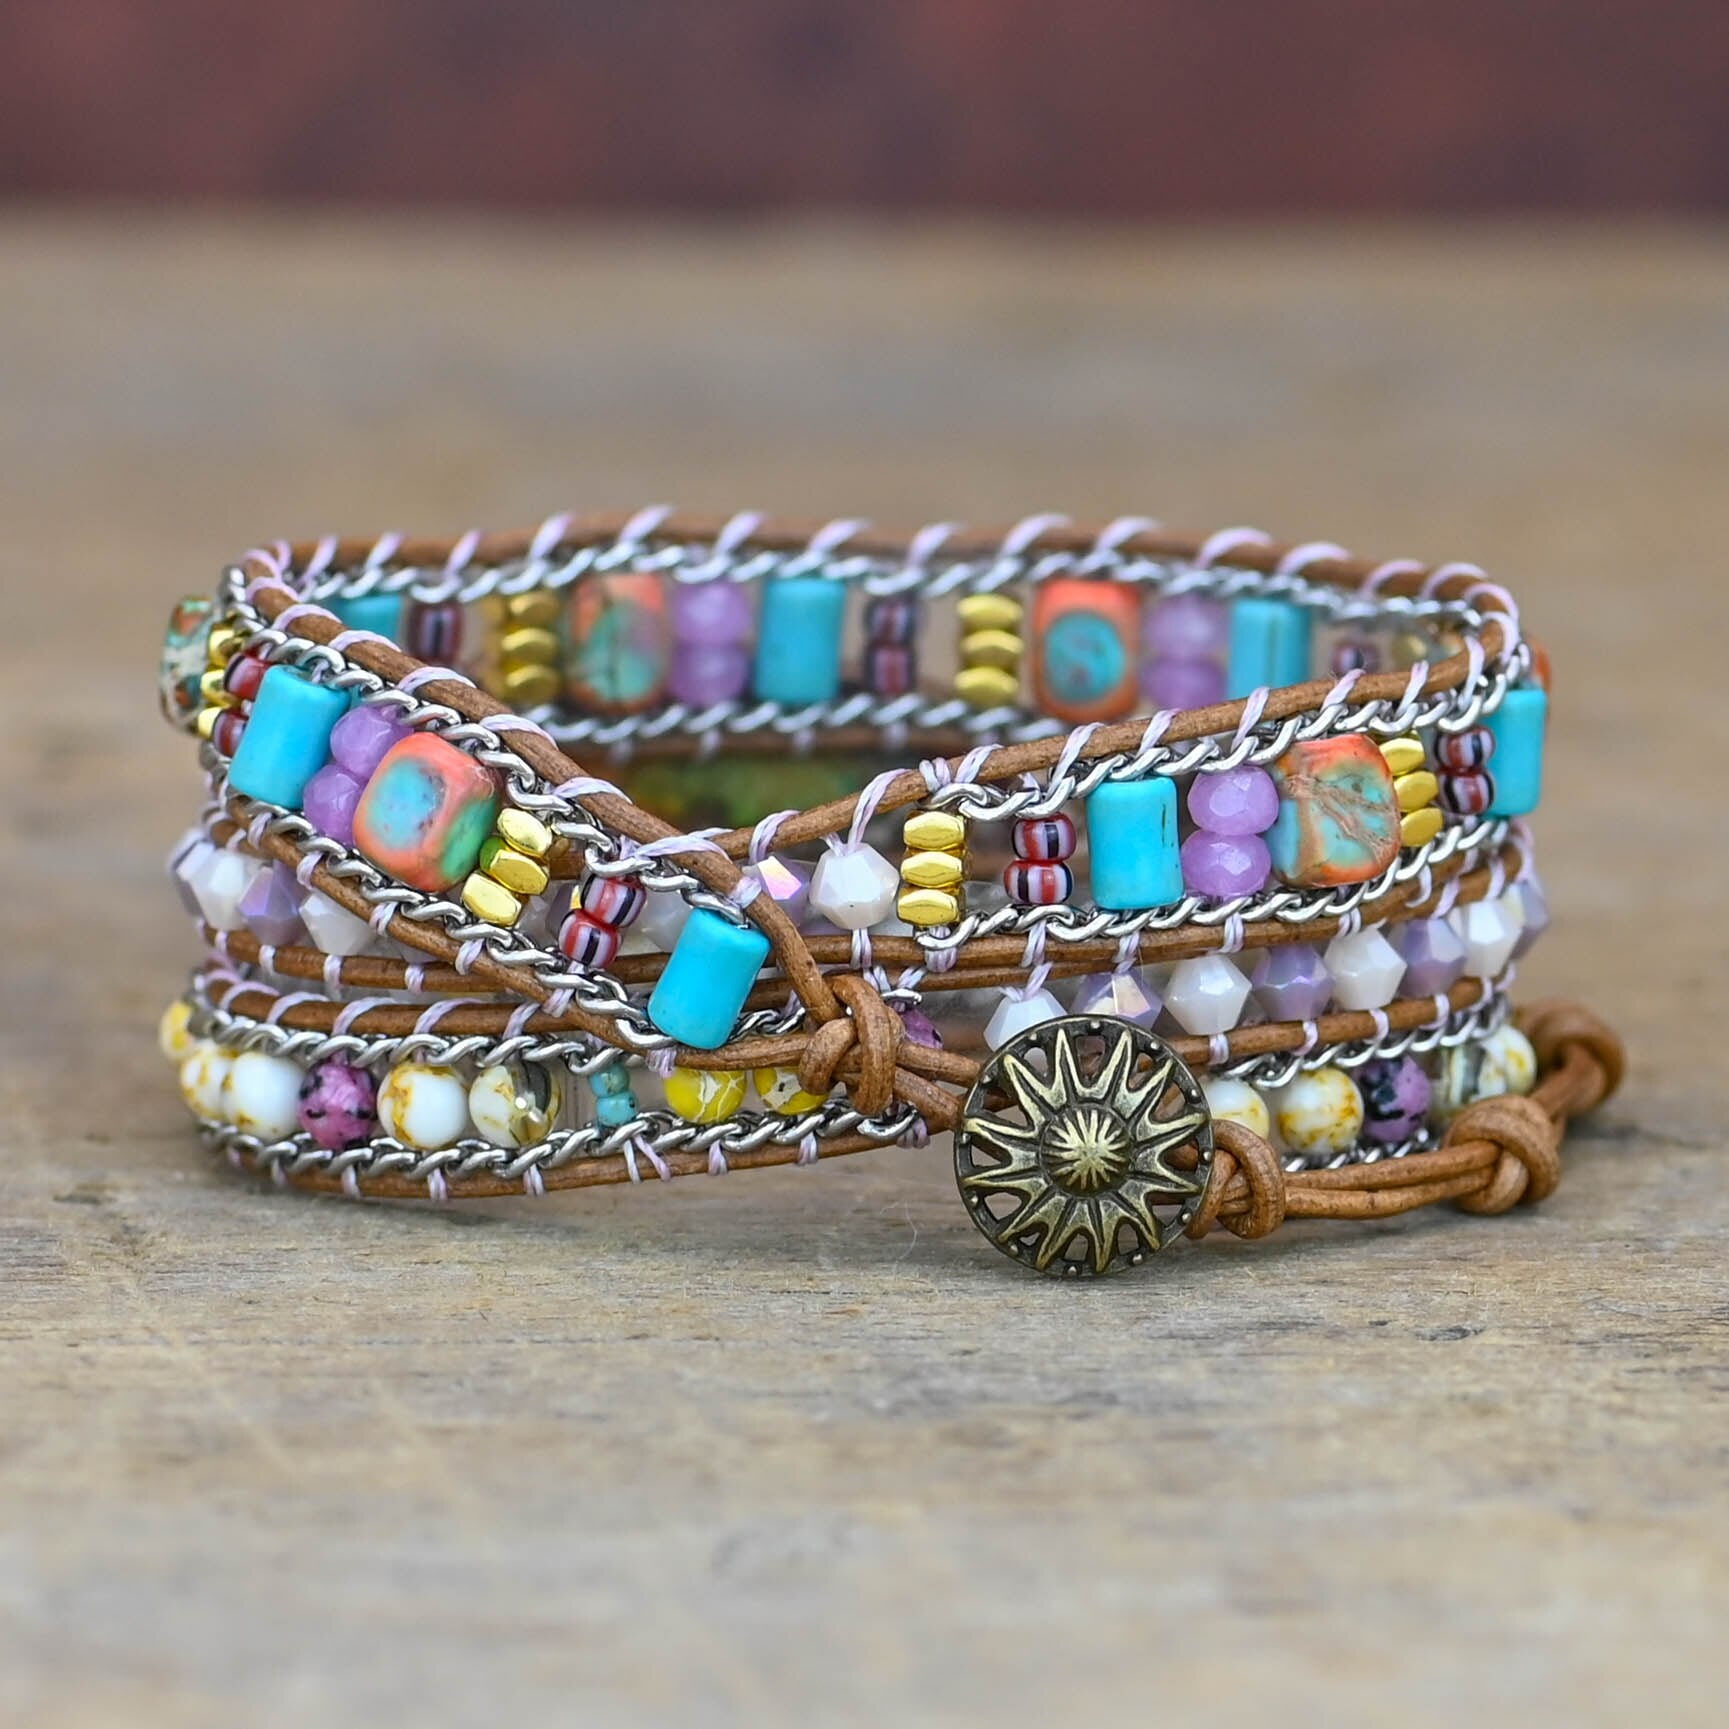 Spiritual Emperor Jasper Wrap Bracelet - Wrap Bracelets - Pretland | Spiritual Crystals & Jewelry